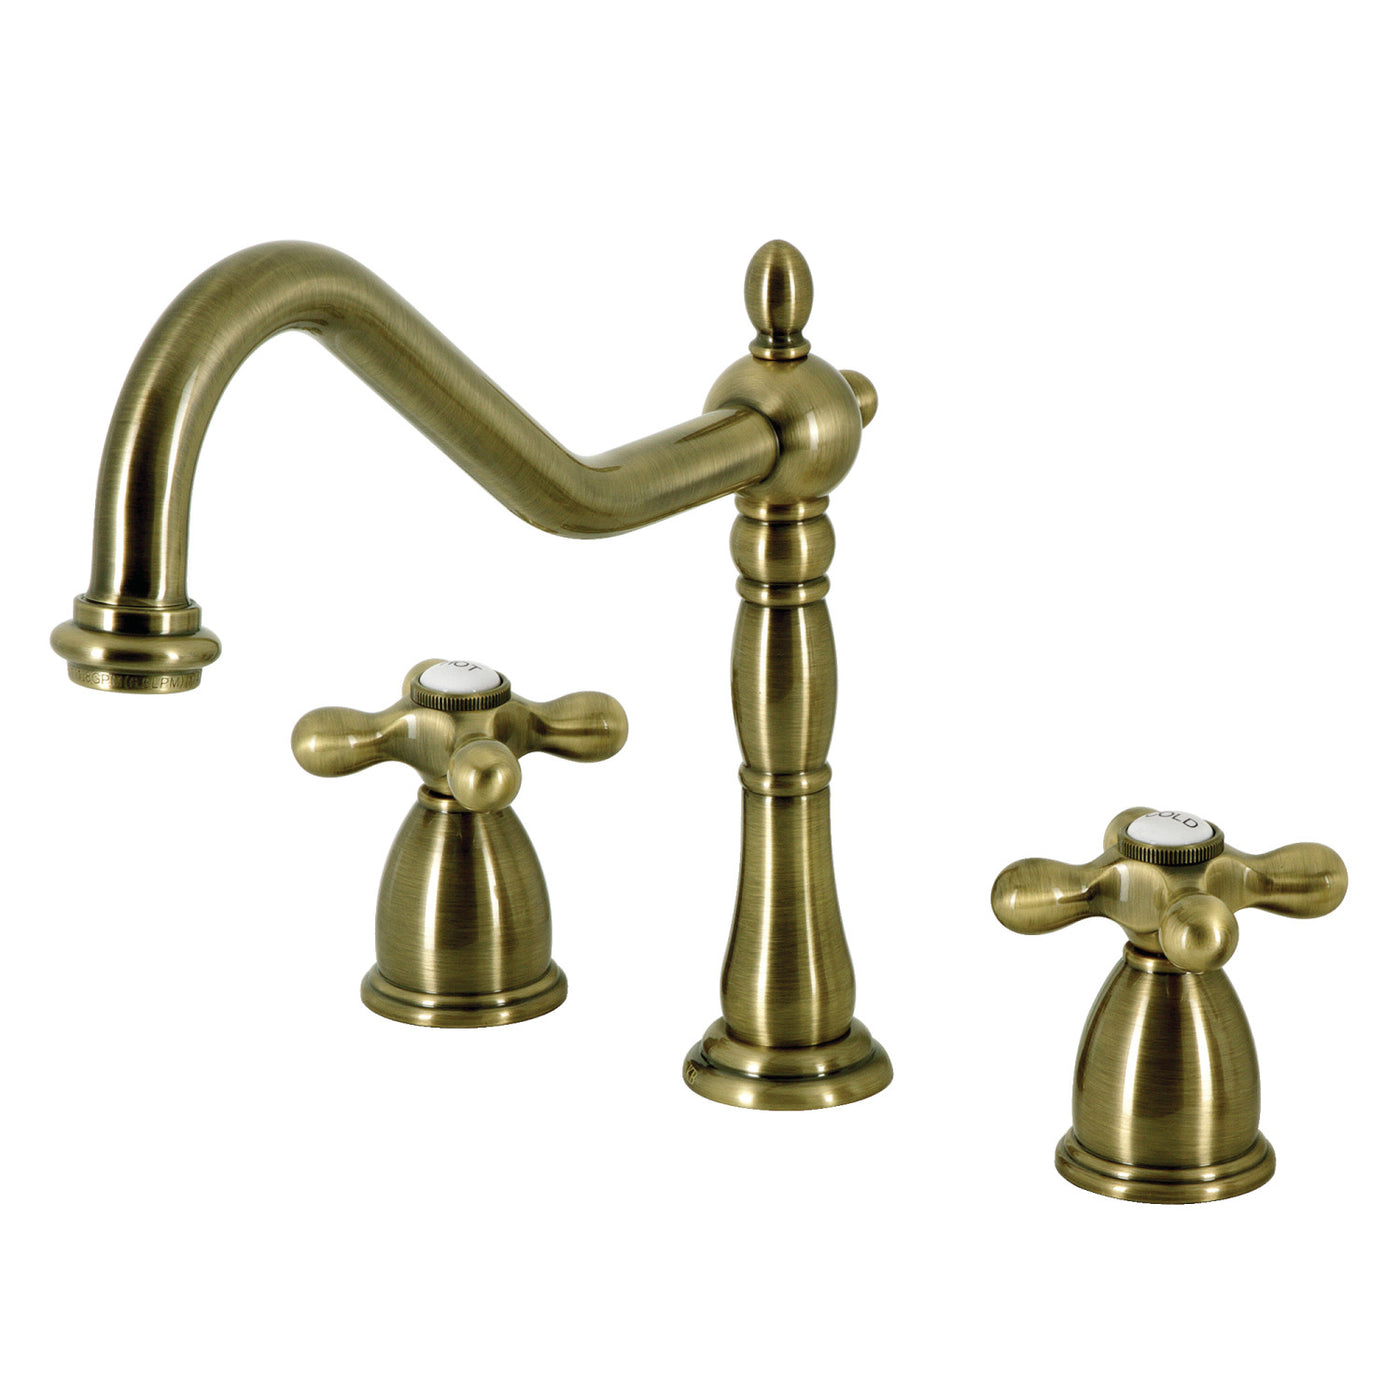 Elements of Design EB1793AXLS Widespread Kitchen Faucet, Antique Brass